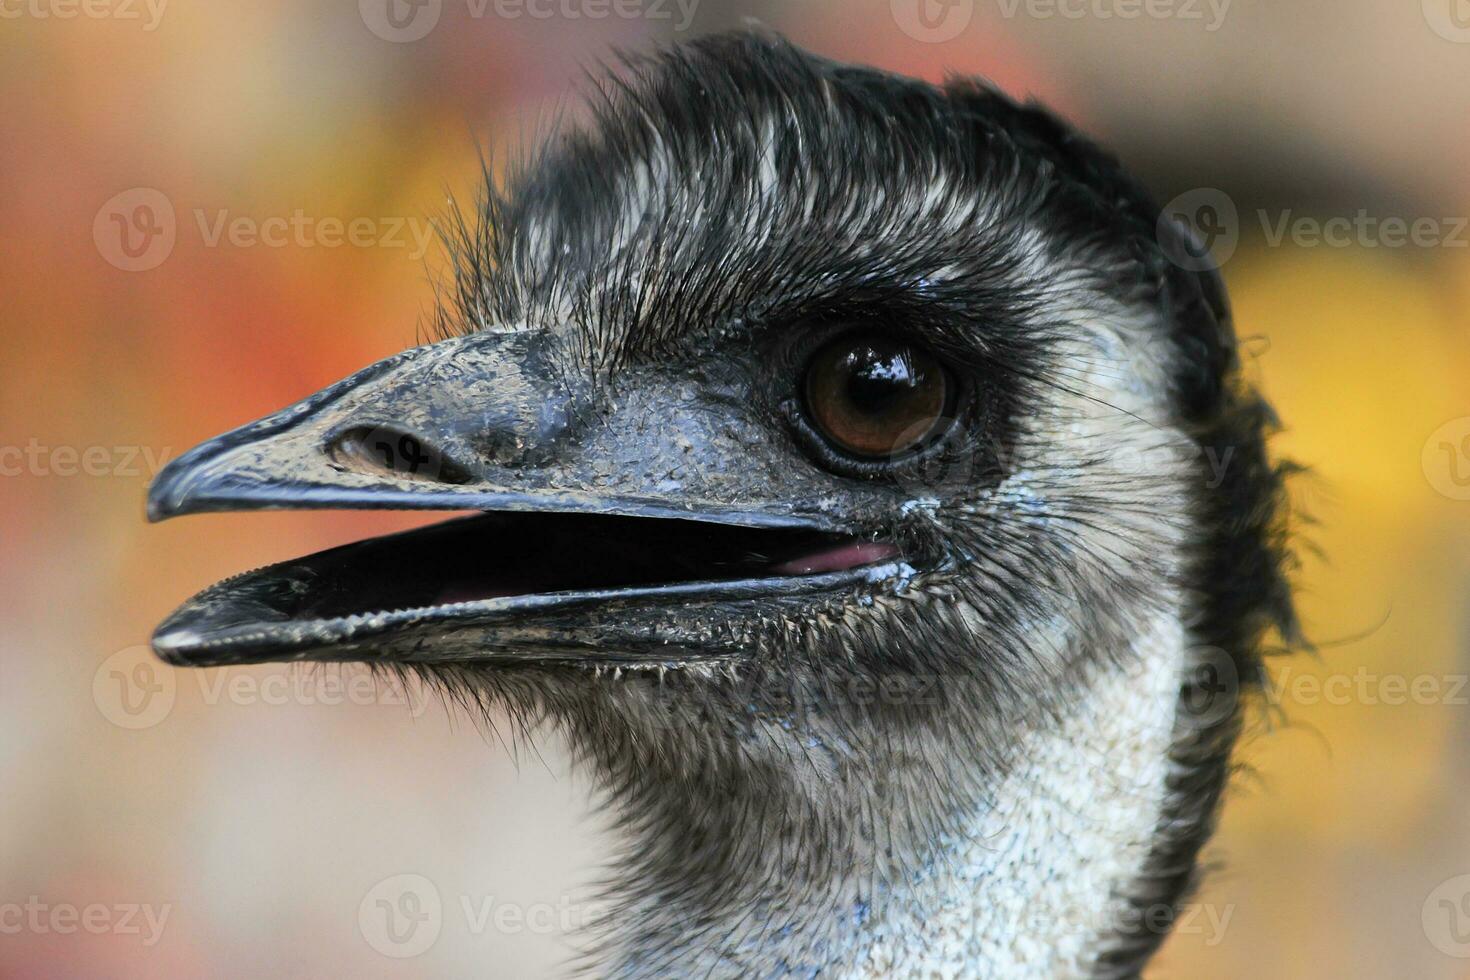 brennen unta oder Emu dromaius novaehollandiae Vogel foto